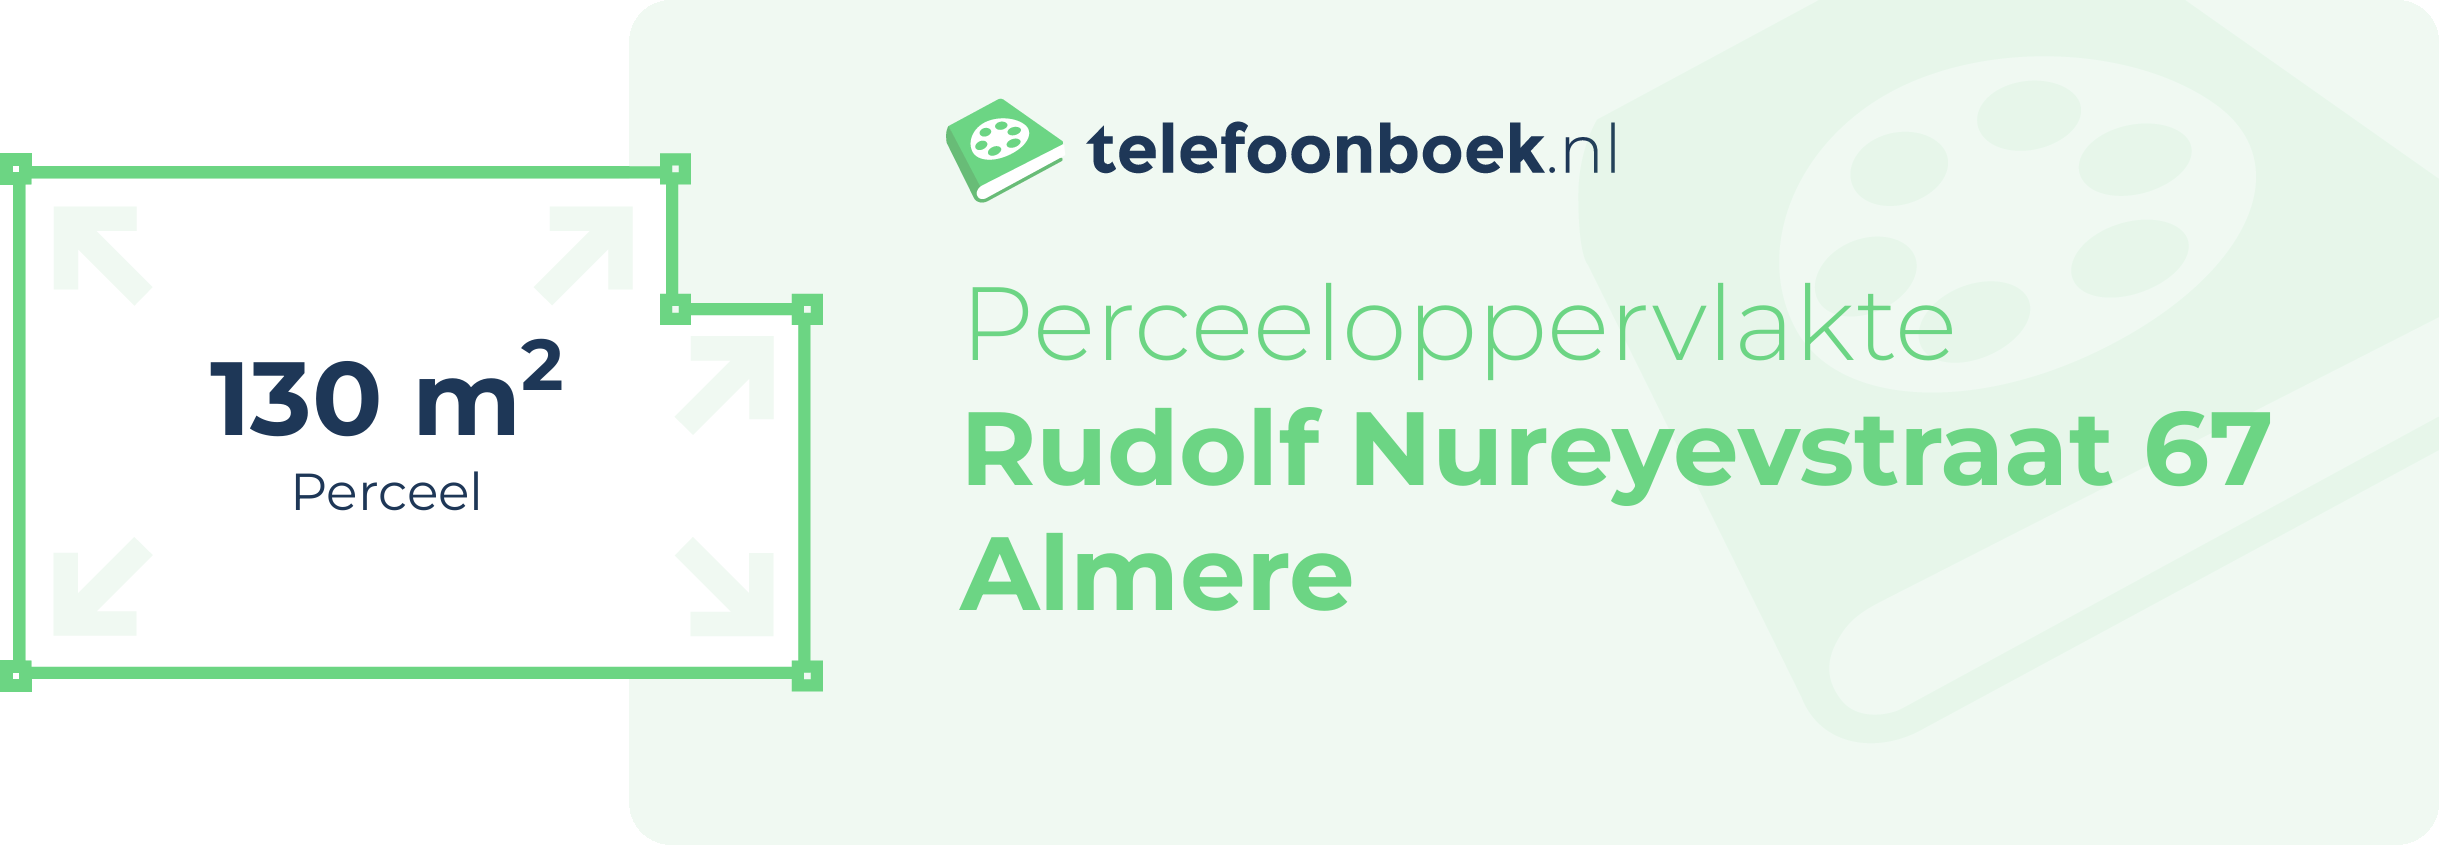 Perceeloppervlakte Rudolf Nureyevstraat 67 Almere